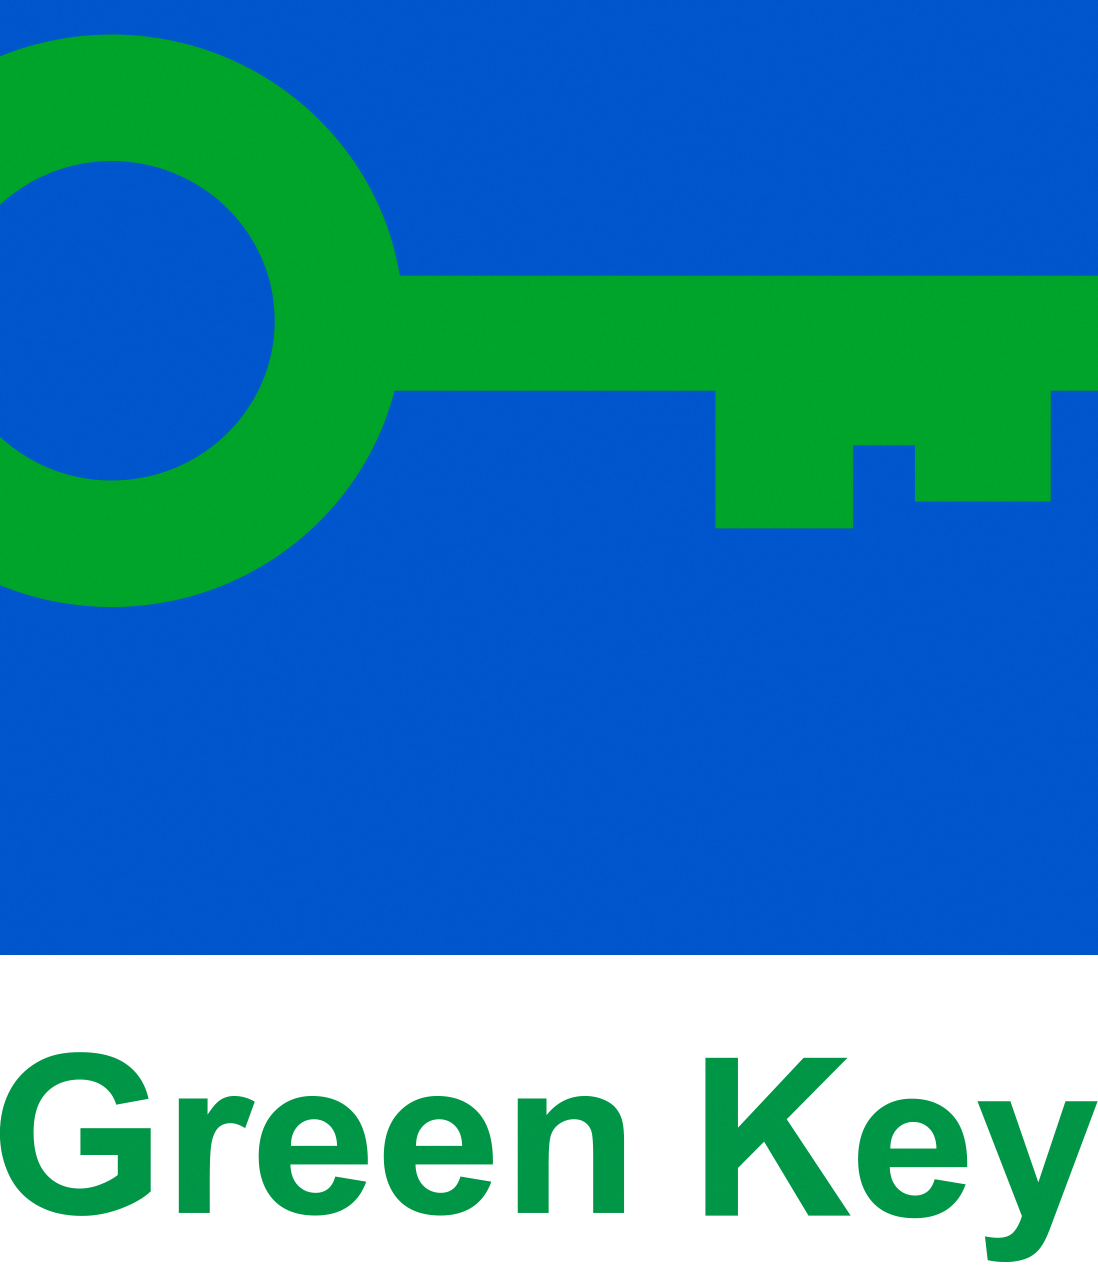 greenkey_logo_GB-mod-001-e1615205027901.png